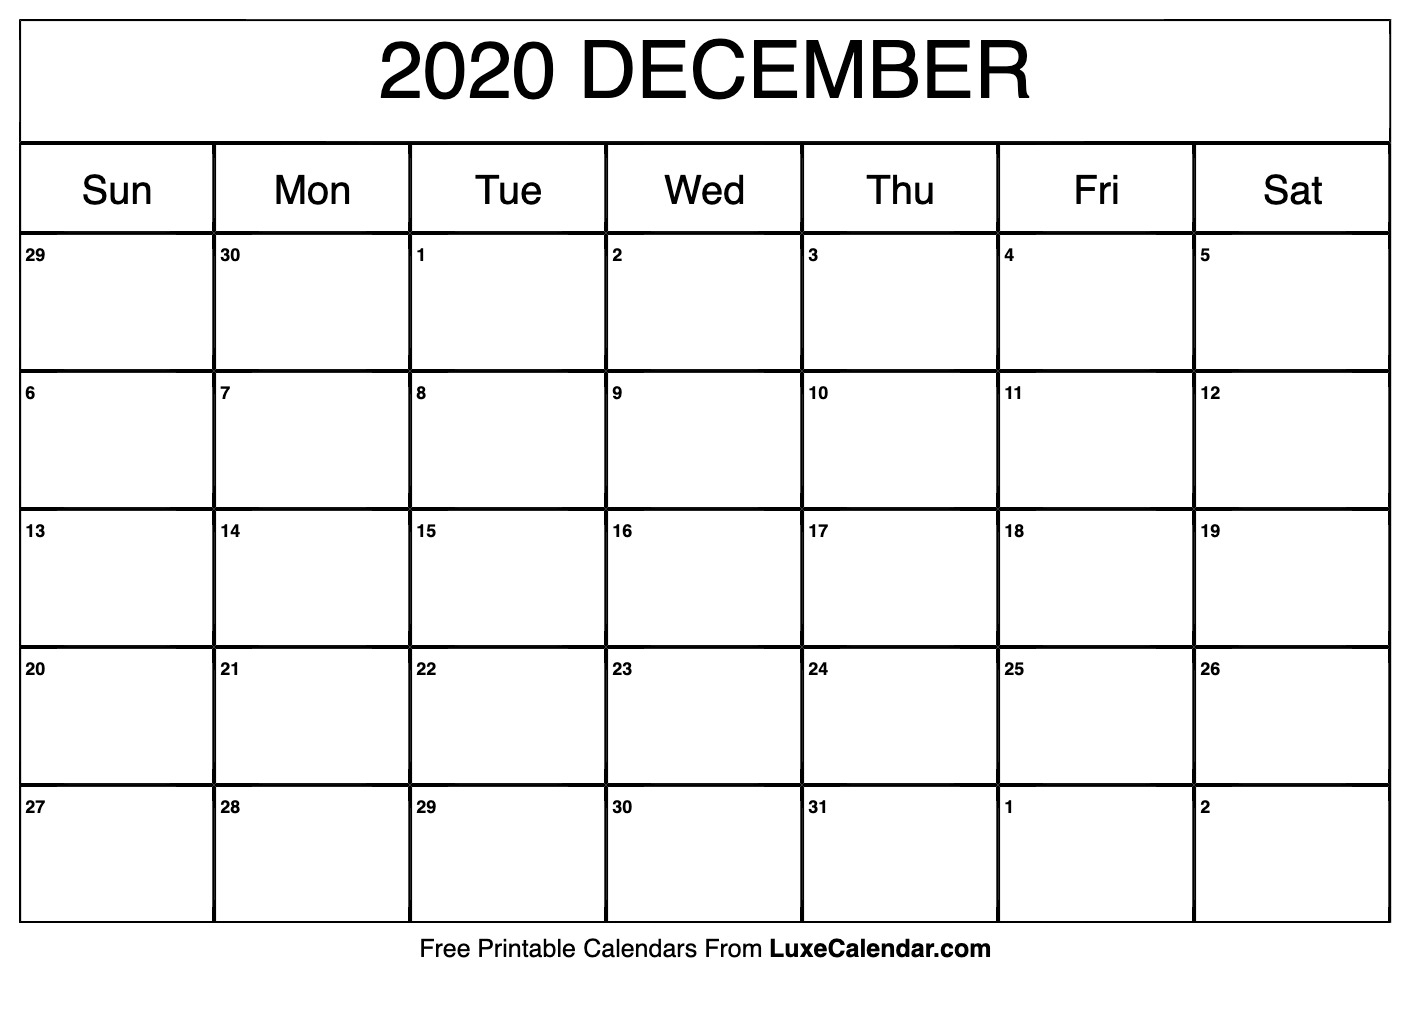 Blank December 2020 Calendar Printable - Luxe Calendar